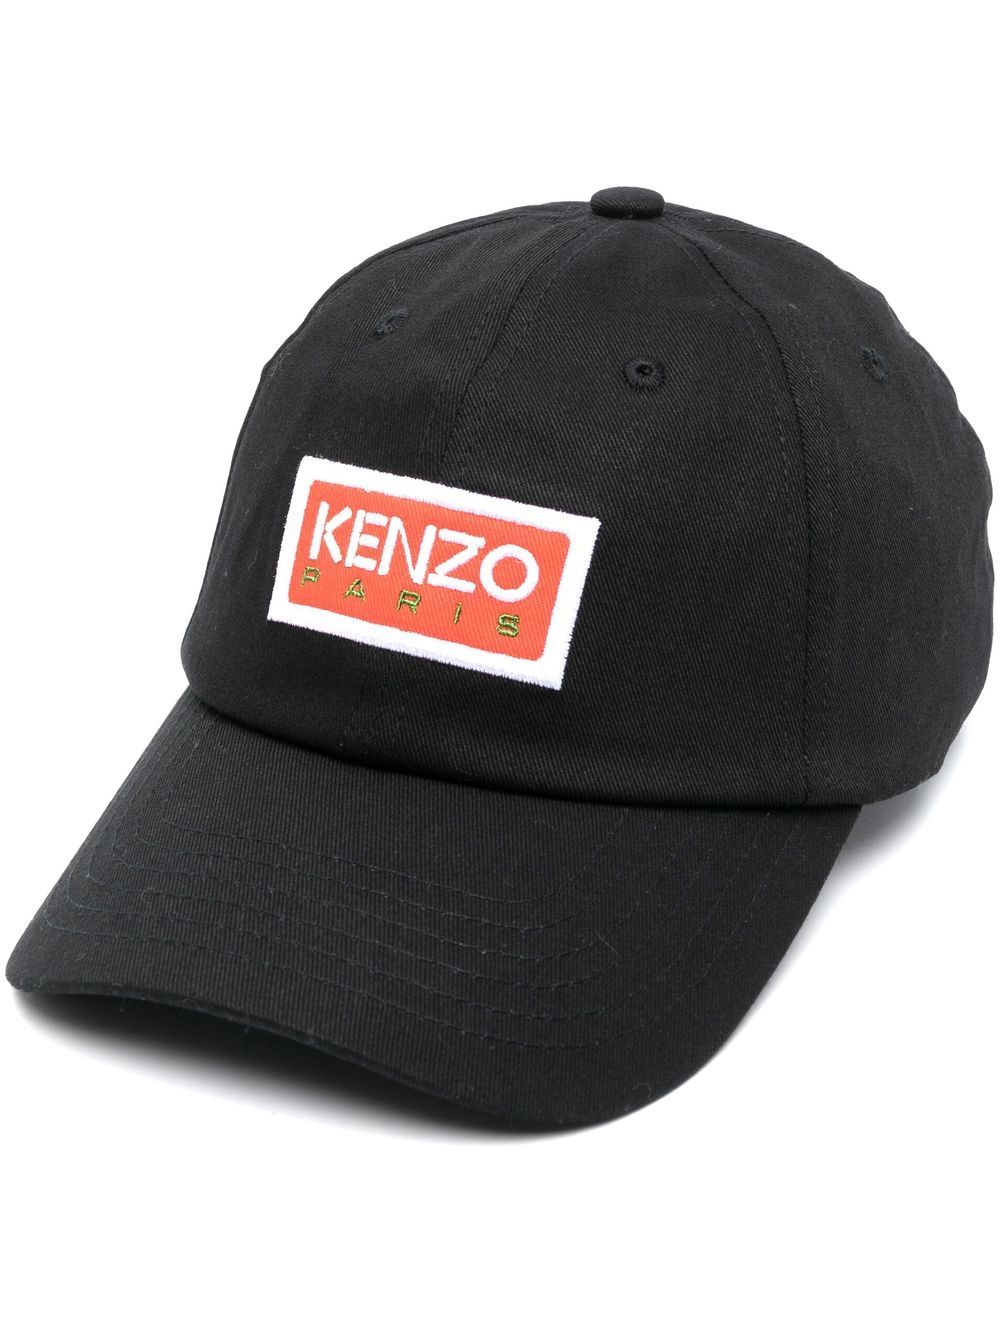 KENZO BLACK LOGO CAP